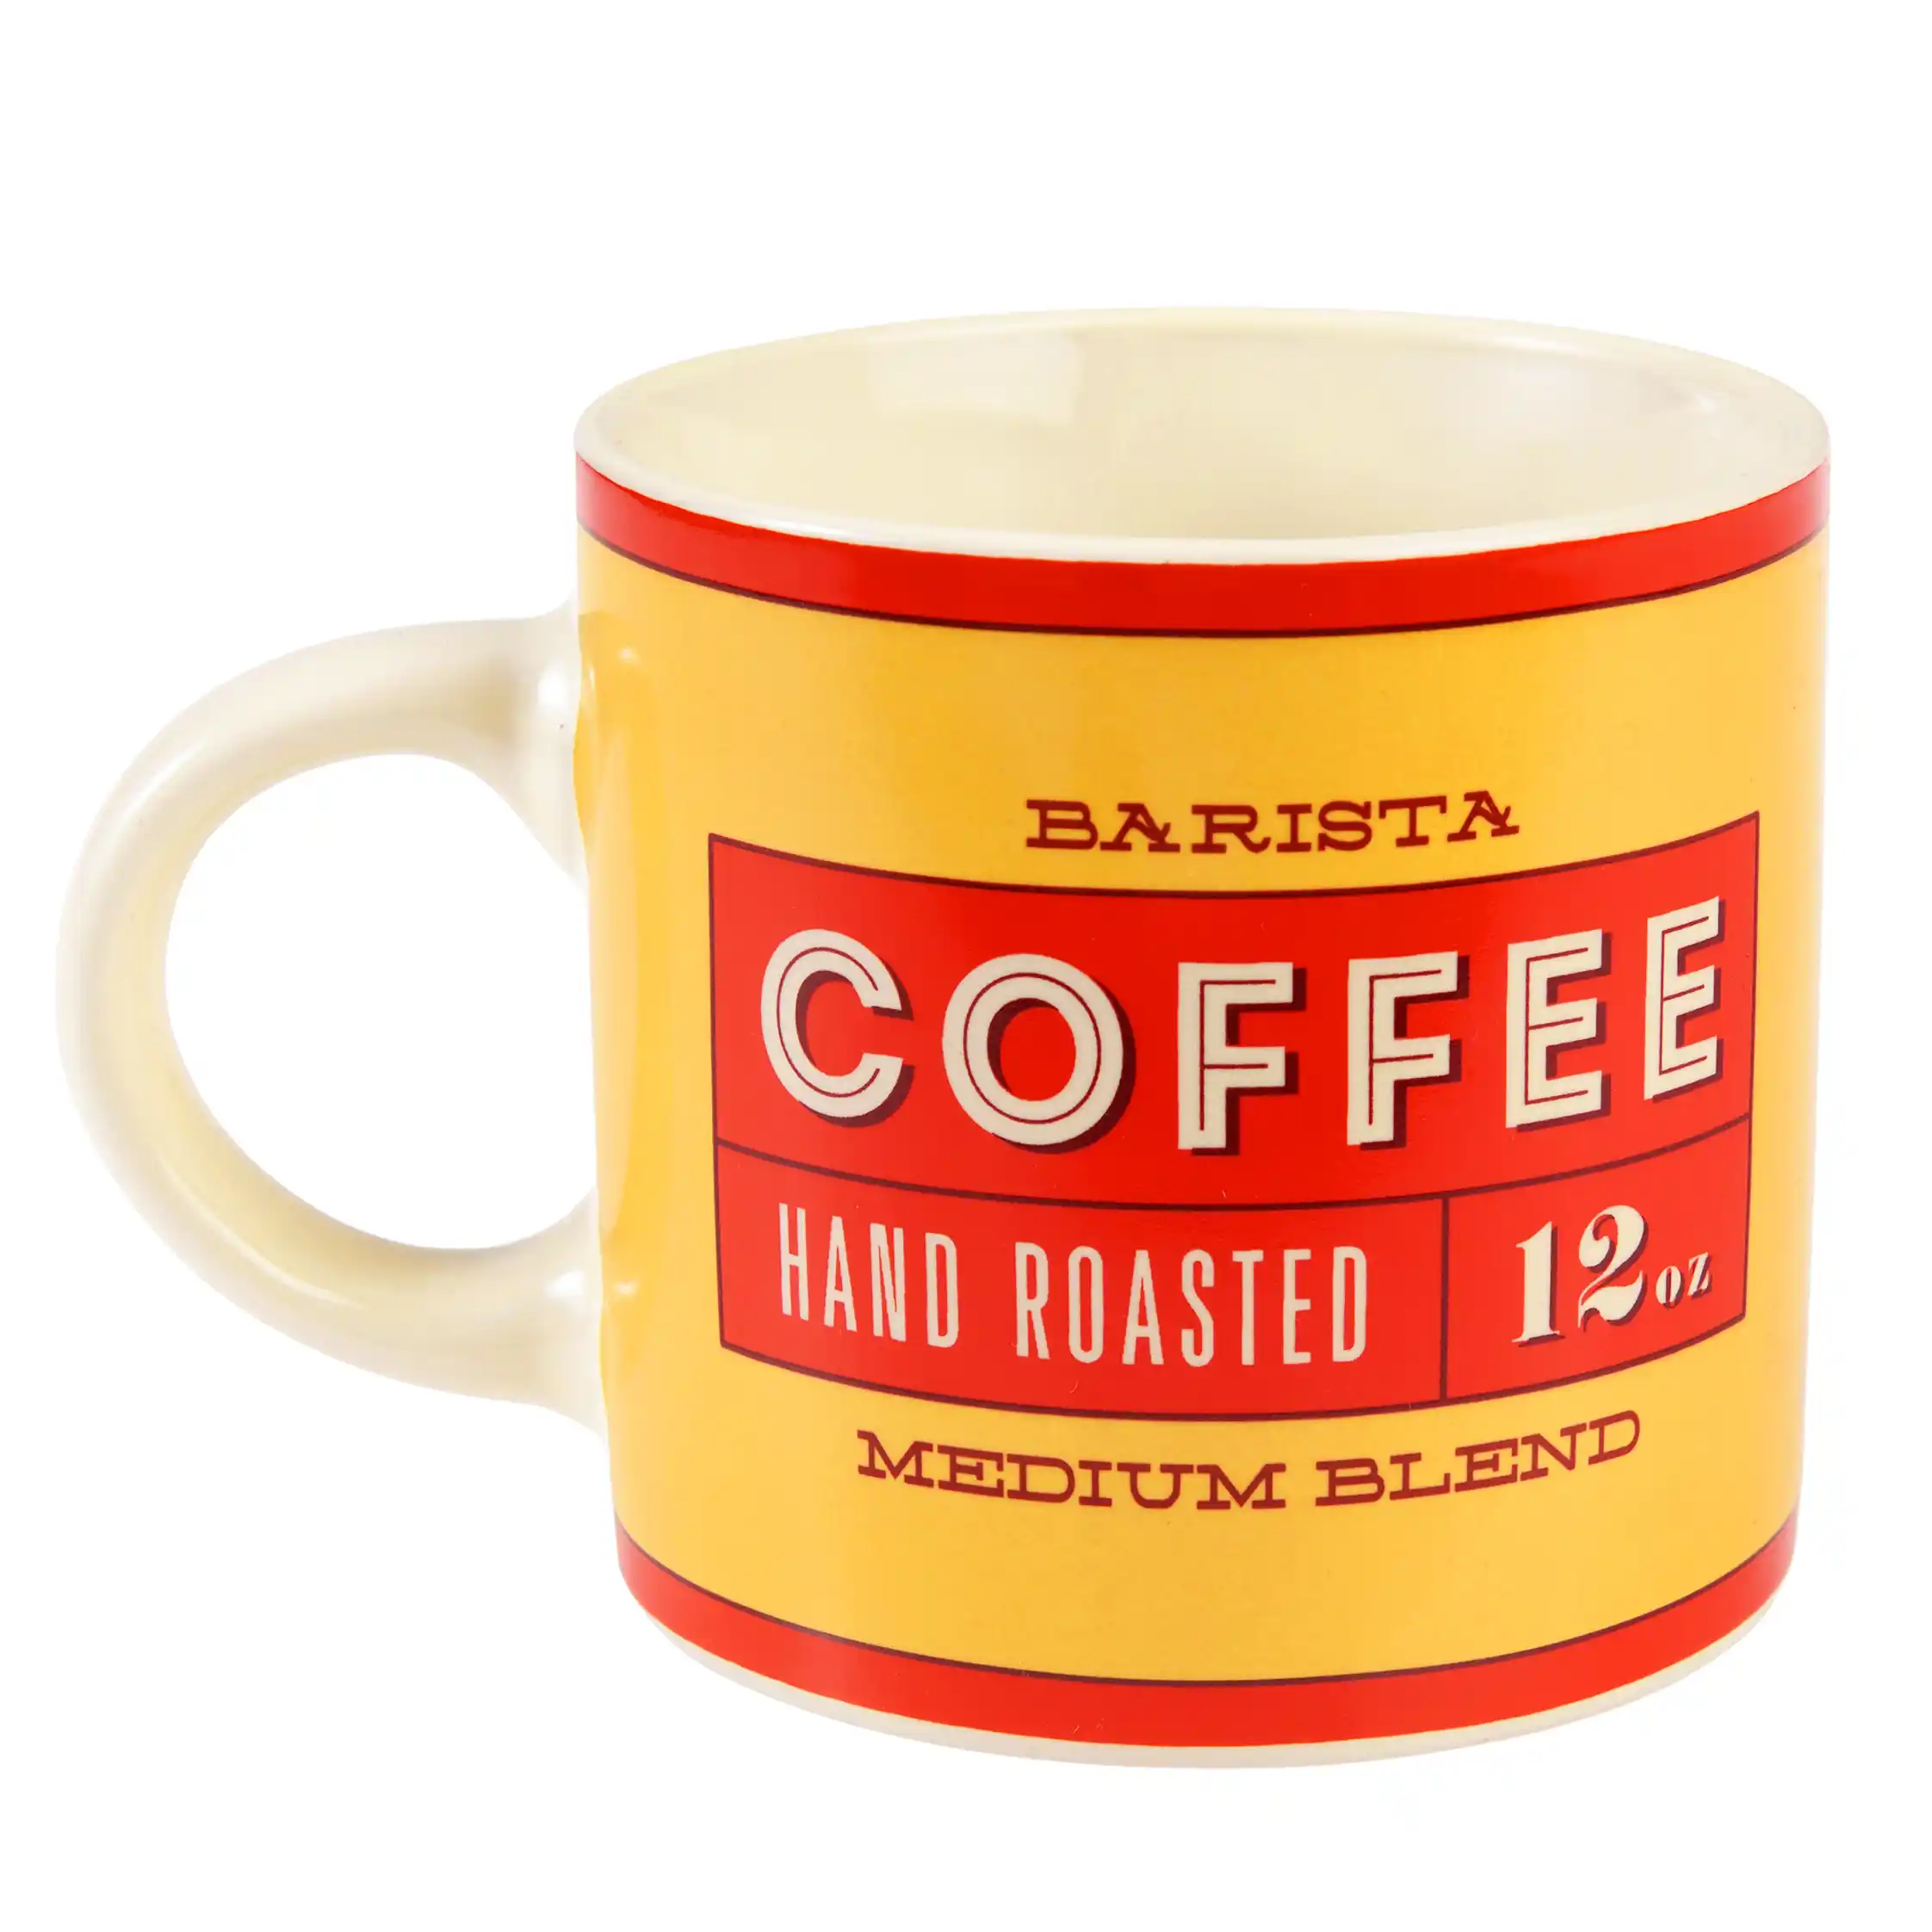 vintage coffee mug - barista